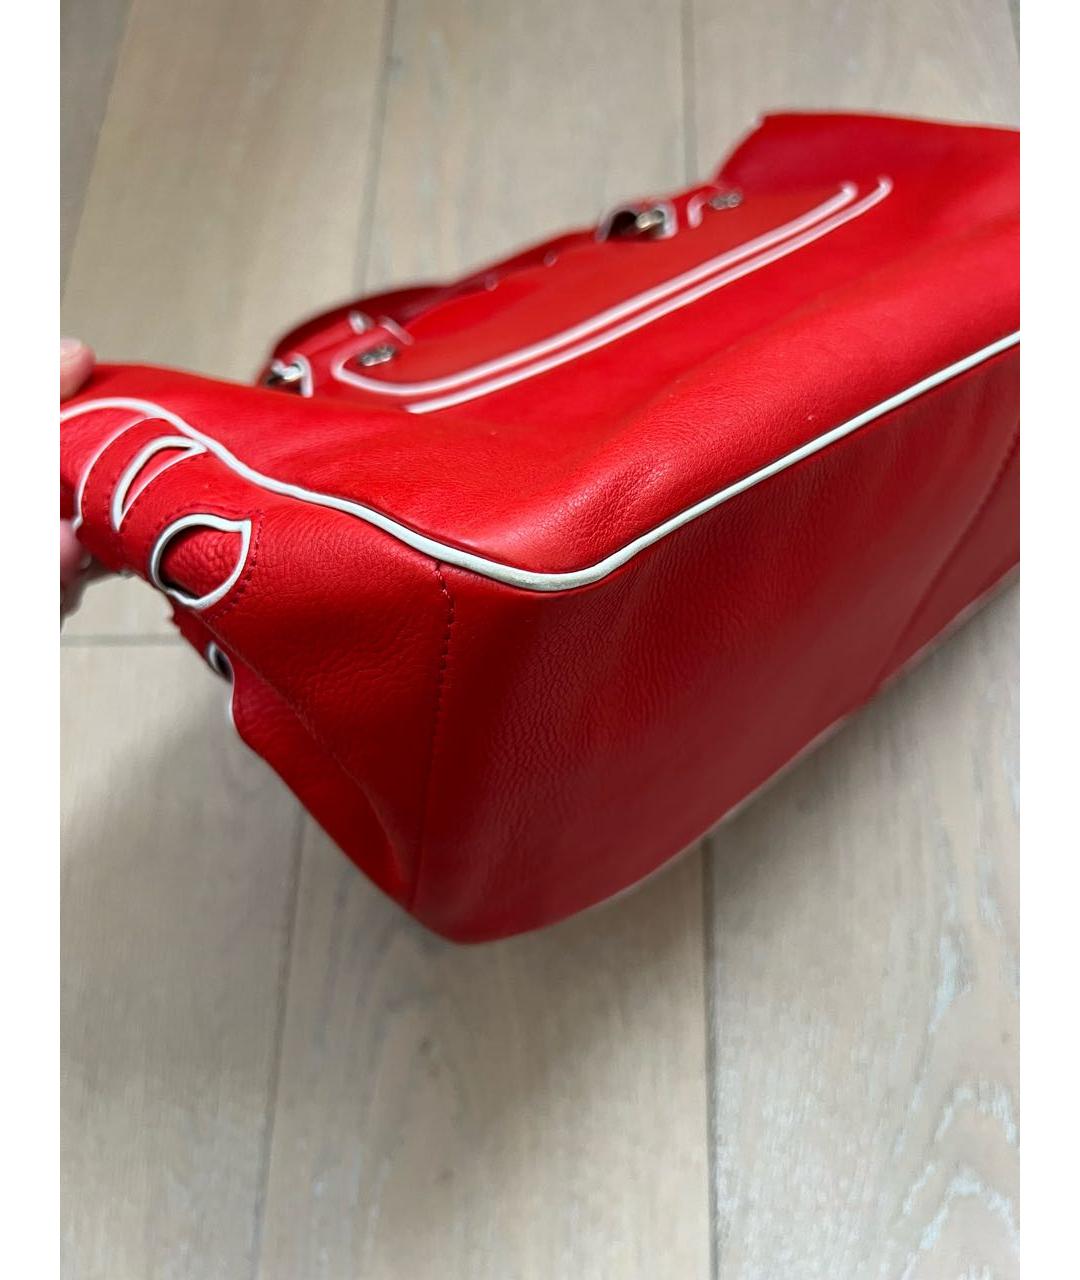 CELINE PRE-OWNED Красная кожаная сумка тоут, фото 2